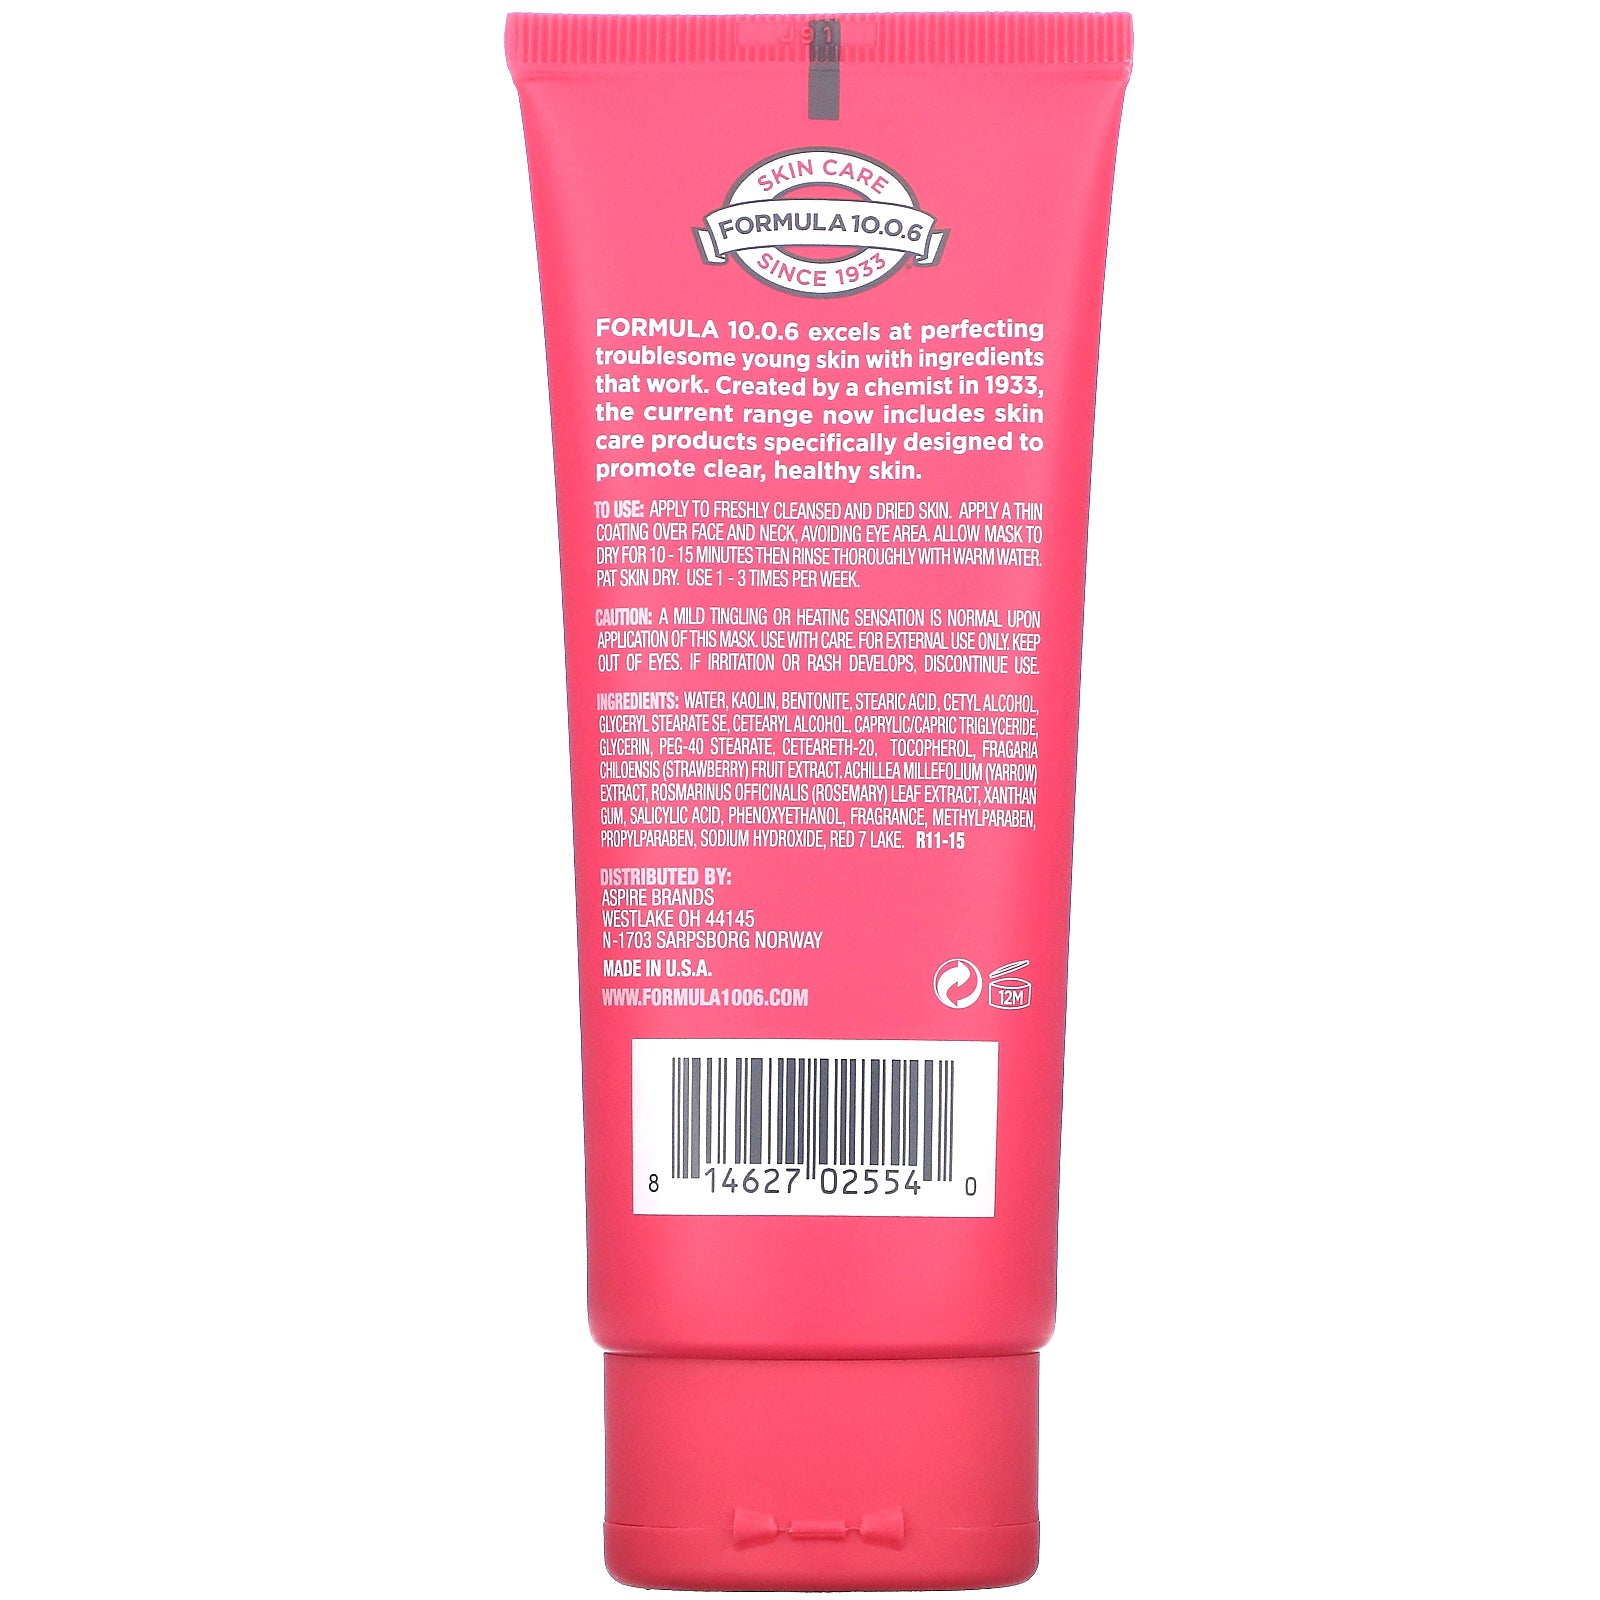 Formula 10.0.6, Pores Be Pure, Skin-Clarifying Mud Beauty Mask, Strawberry + Yarrow, 3.4 fl oz (100 ml)